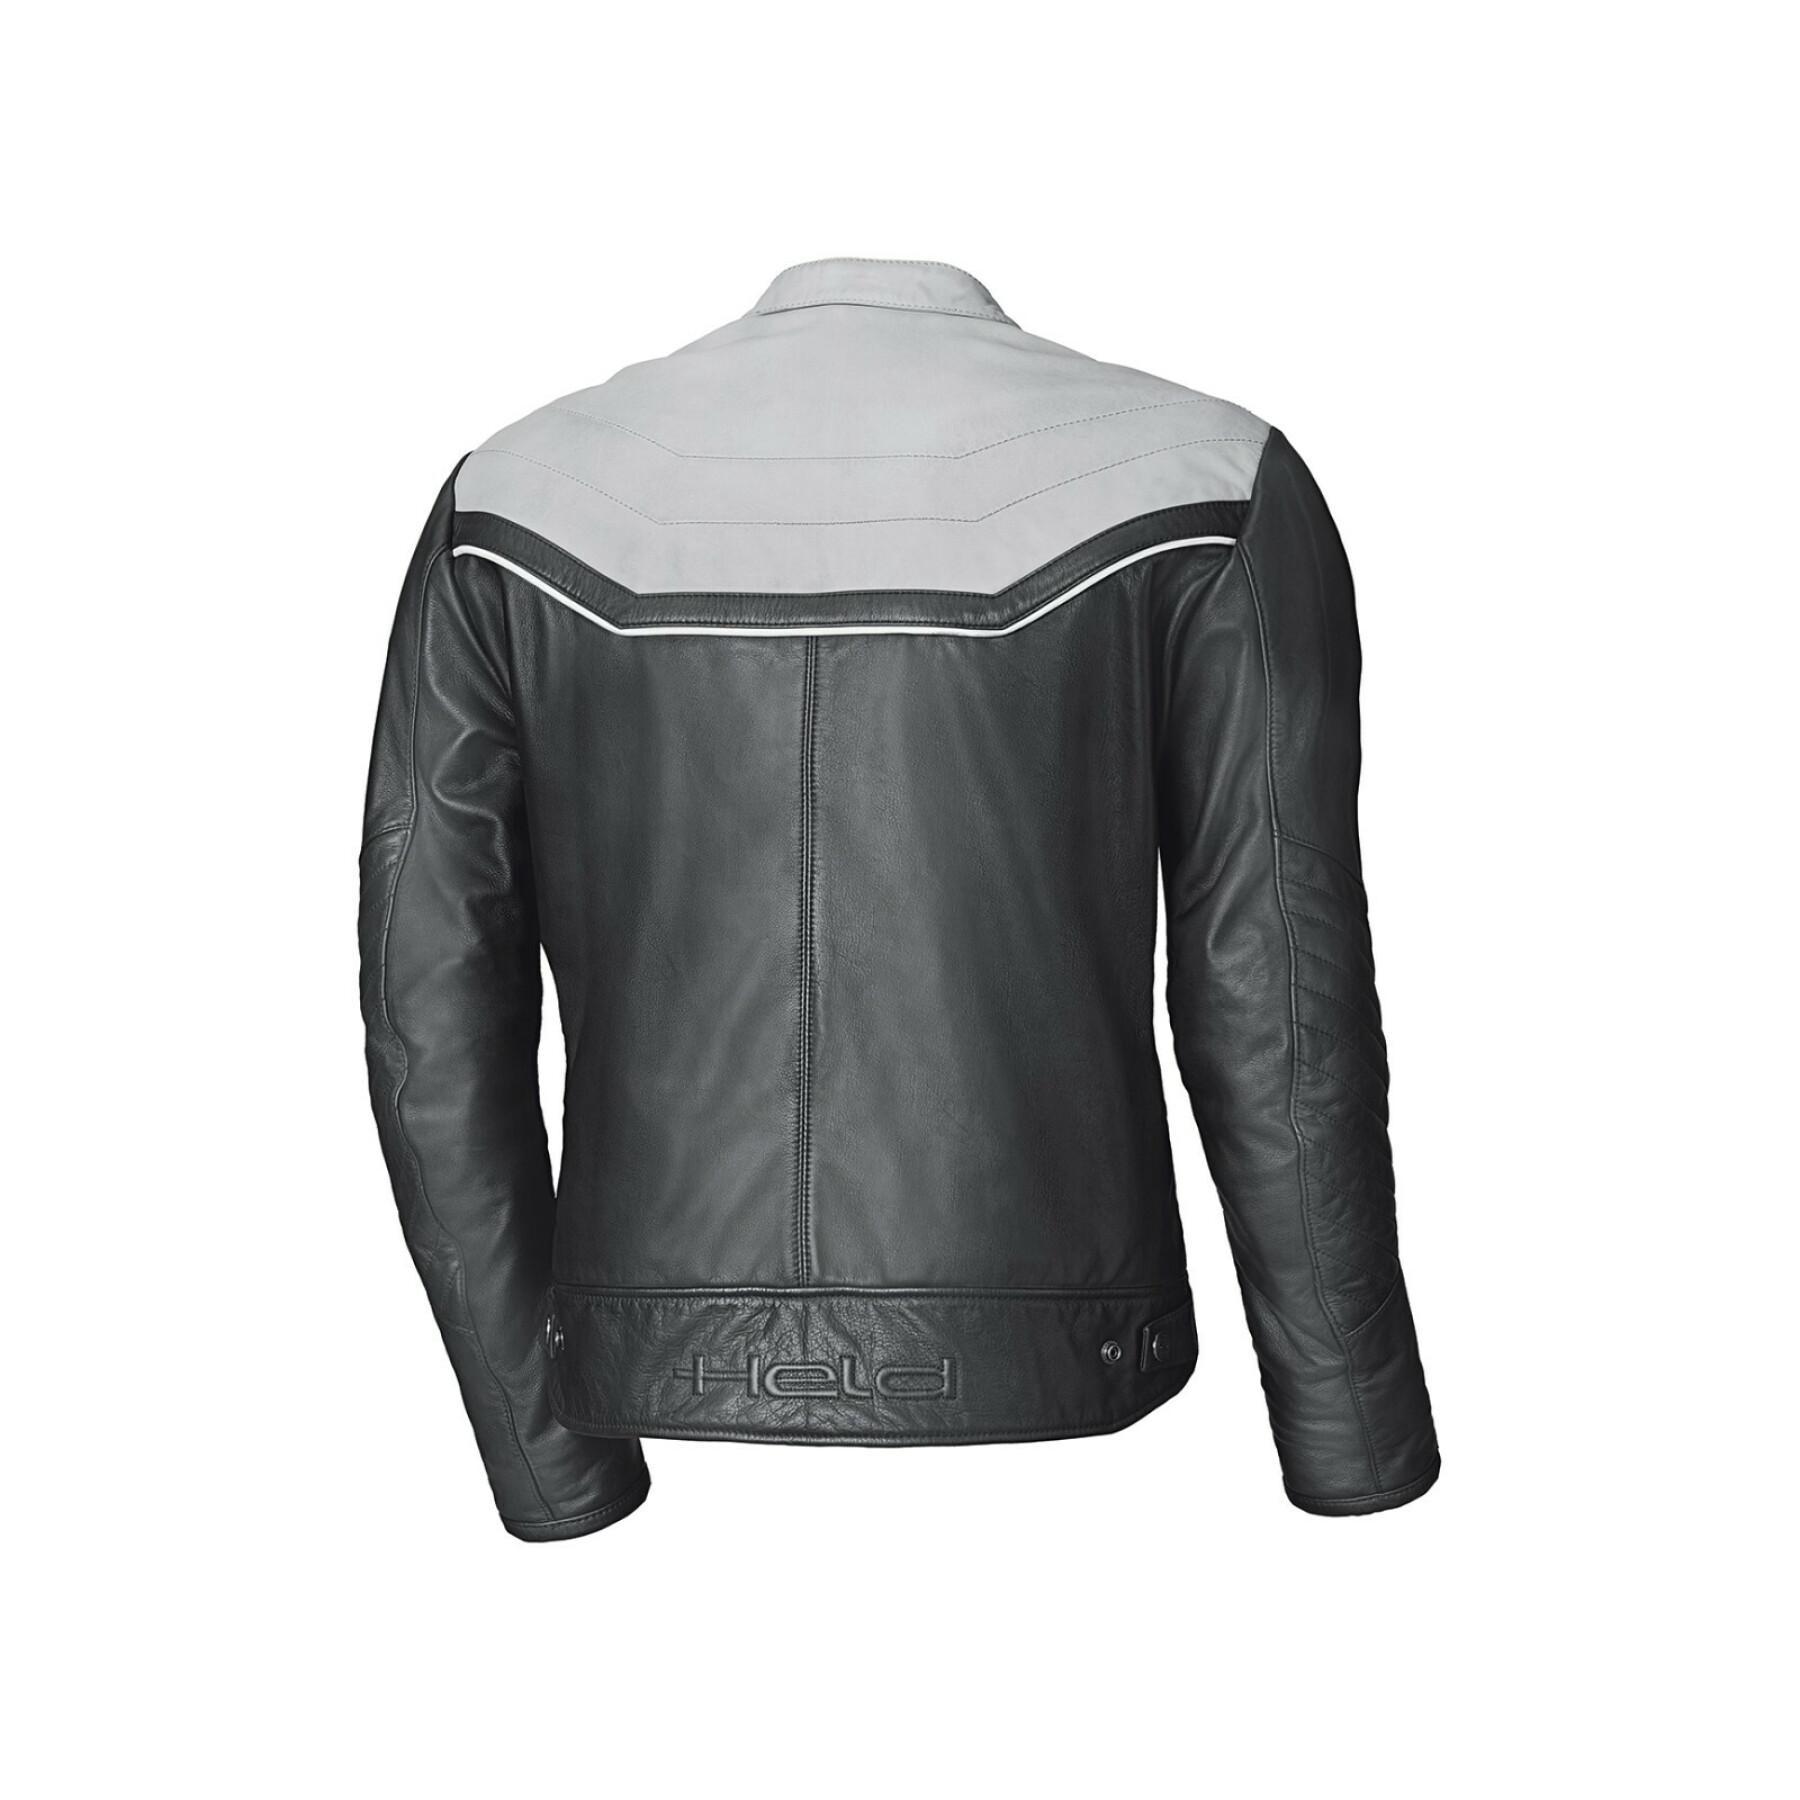 Leather jacket Held heyden